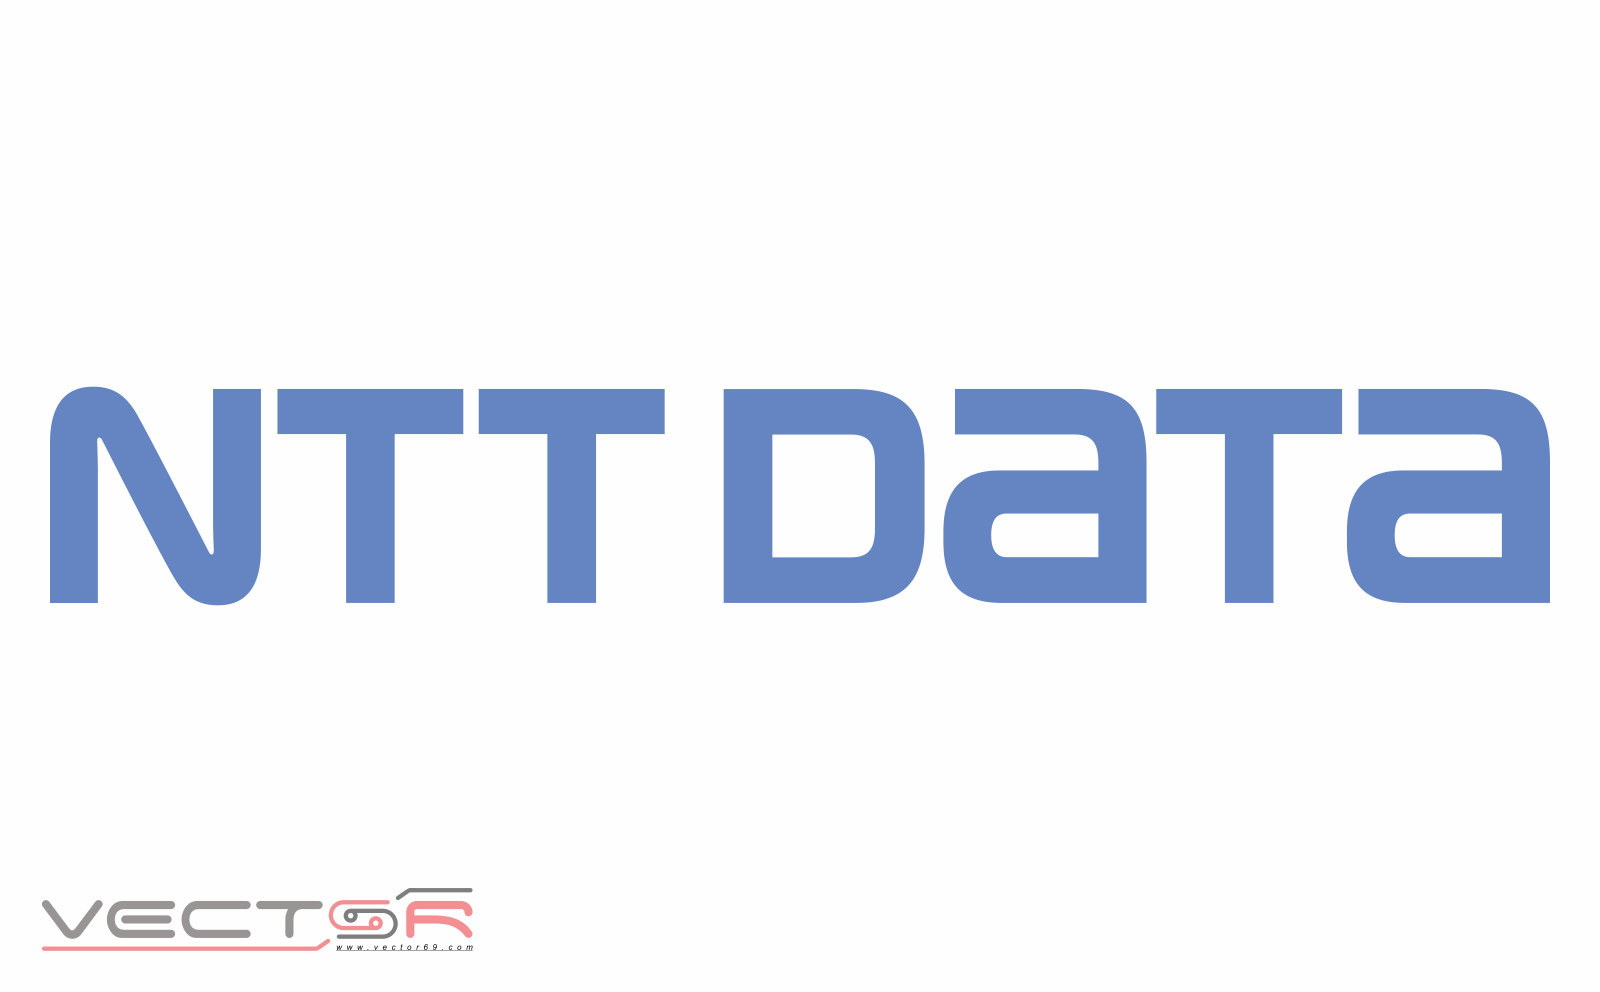 NTT Data Logo - Download Transparent Images, Portable Network Graphics (.PNG)